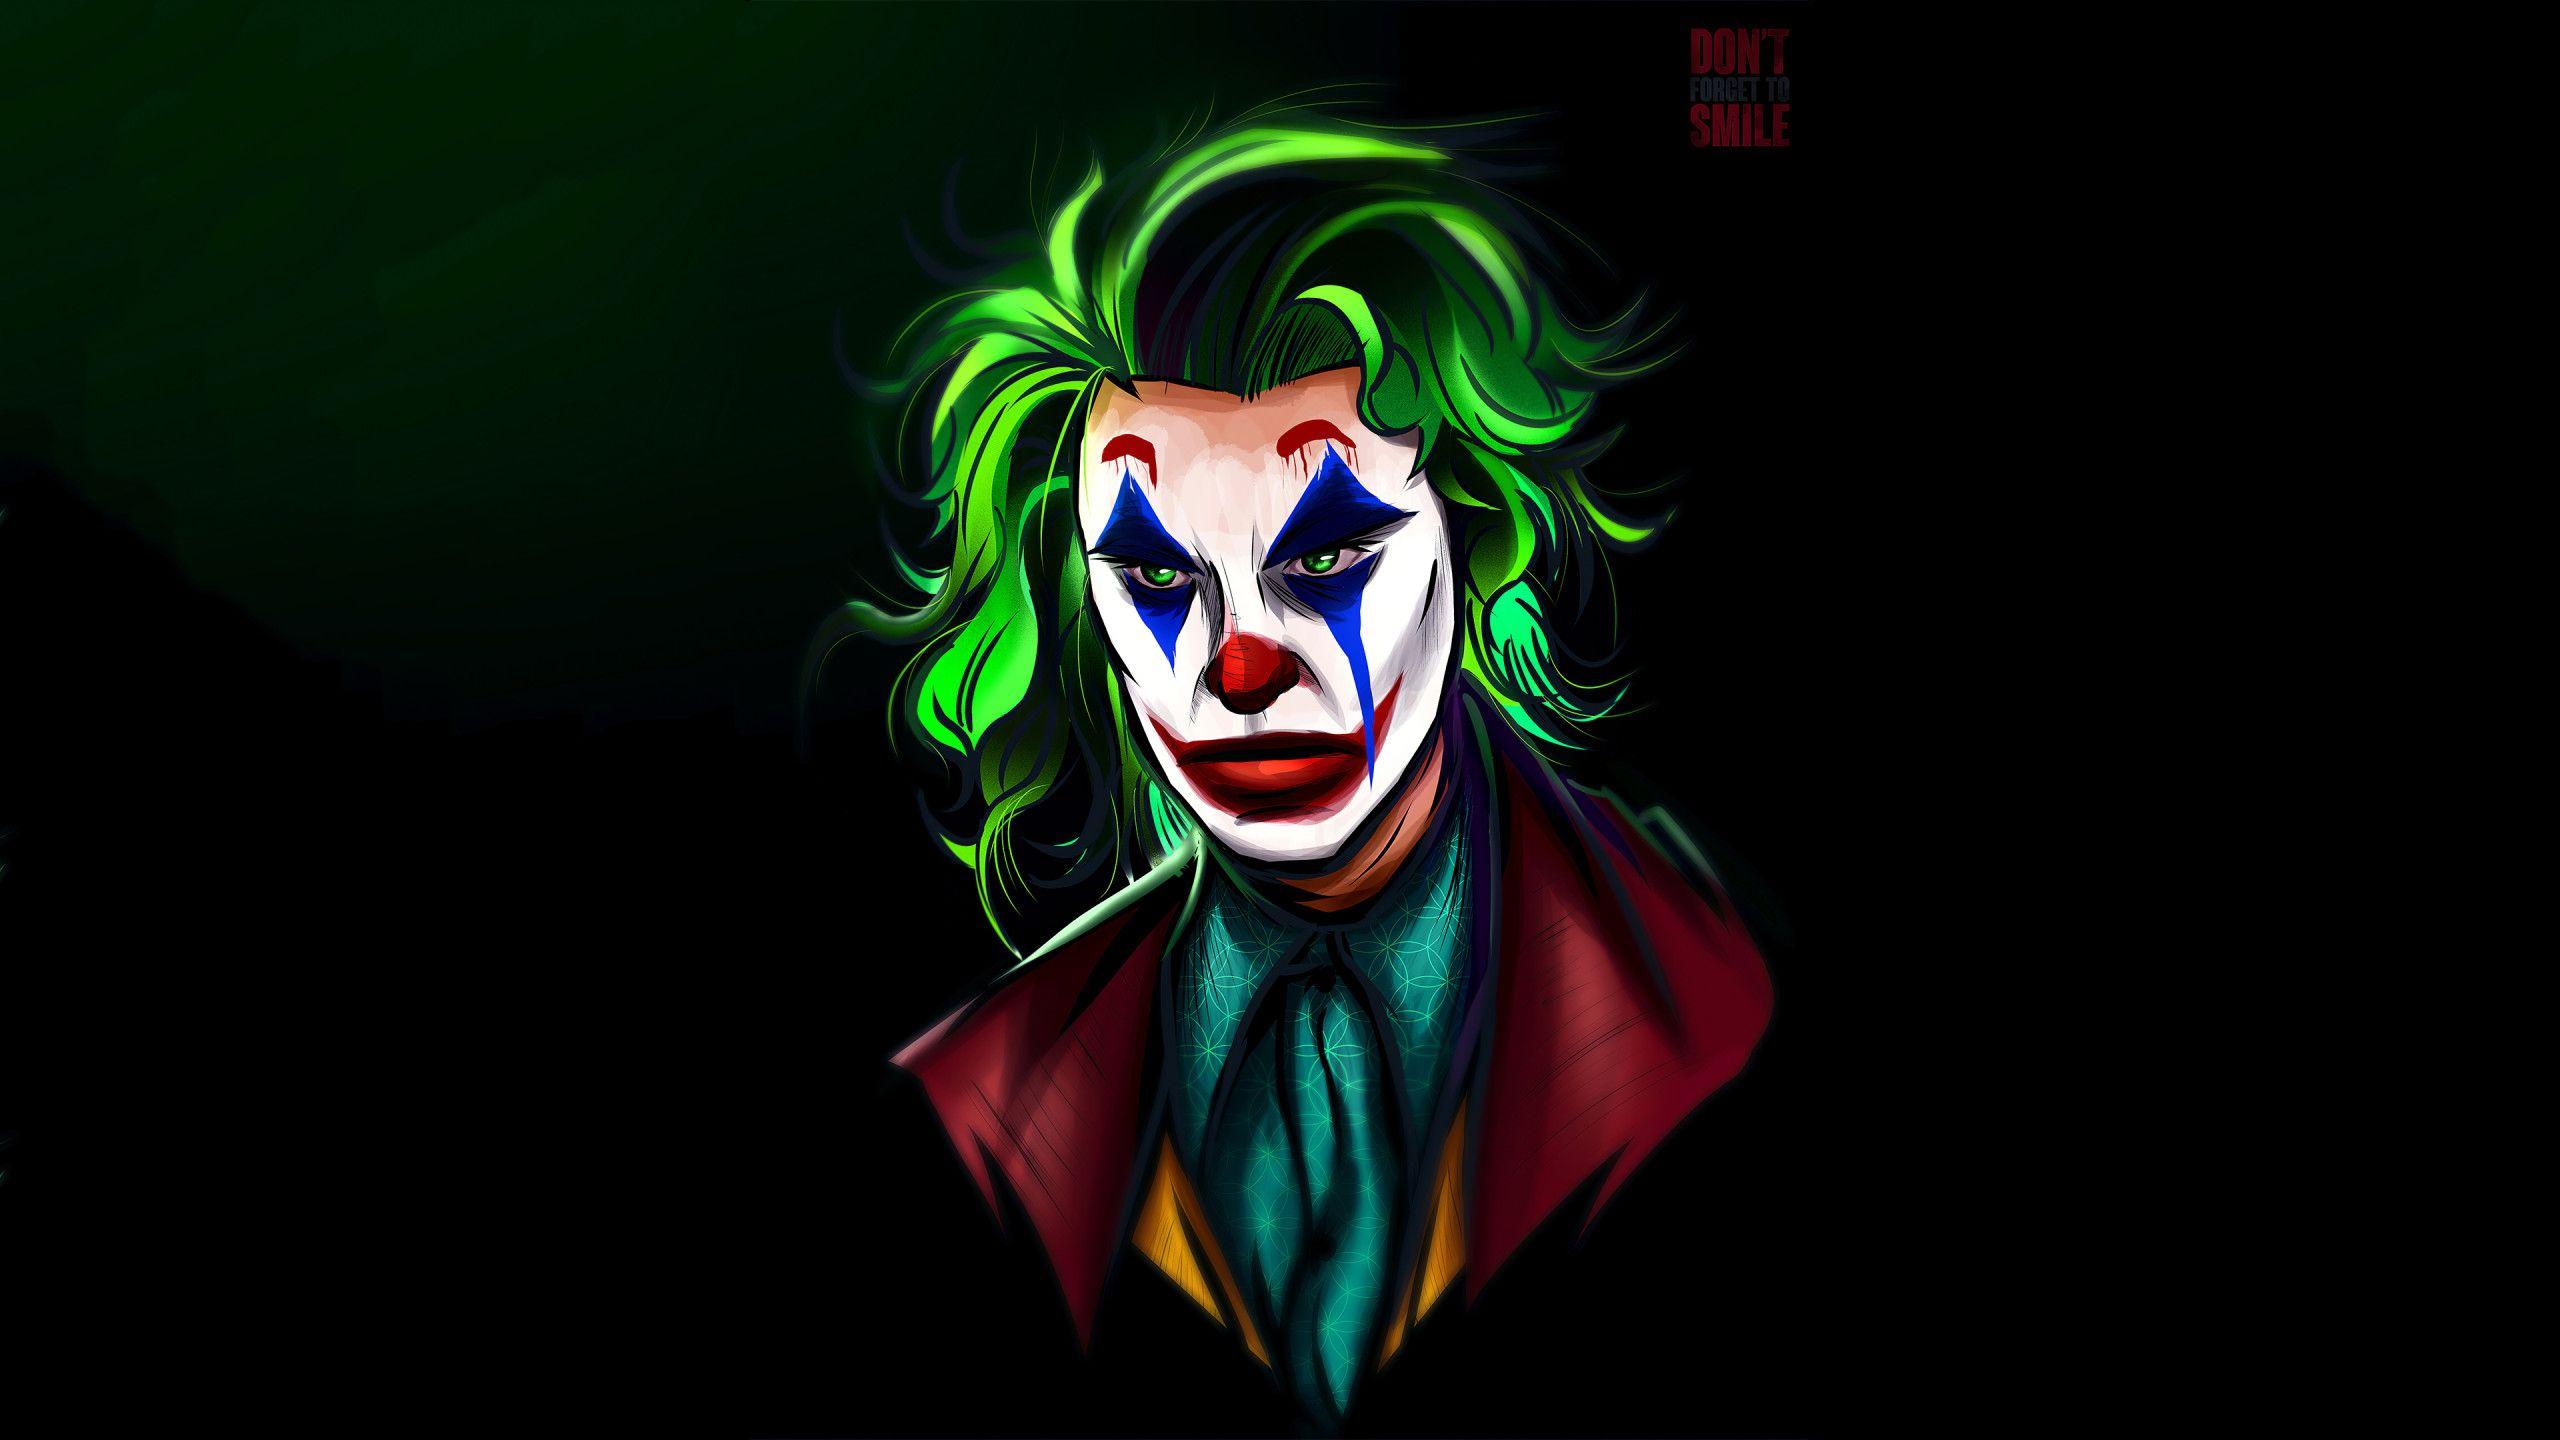 Wallpaper 4k joker Download Joker